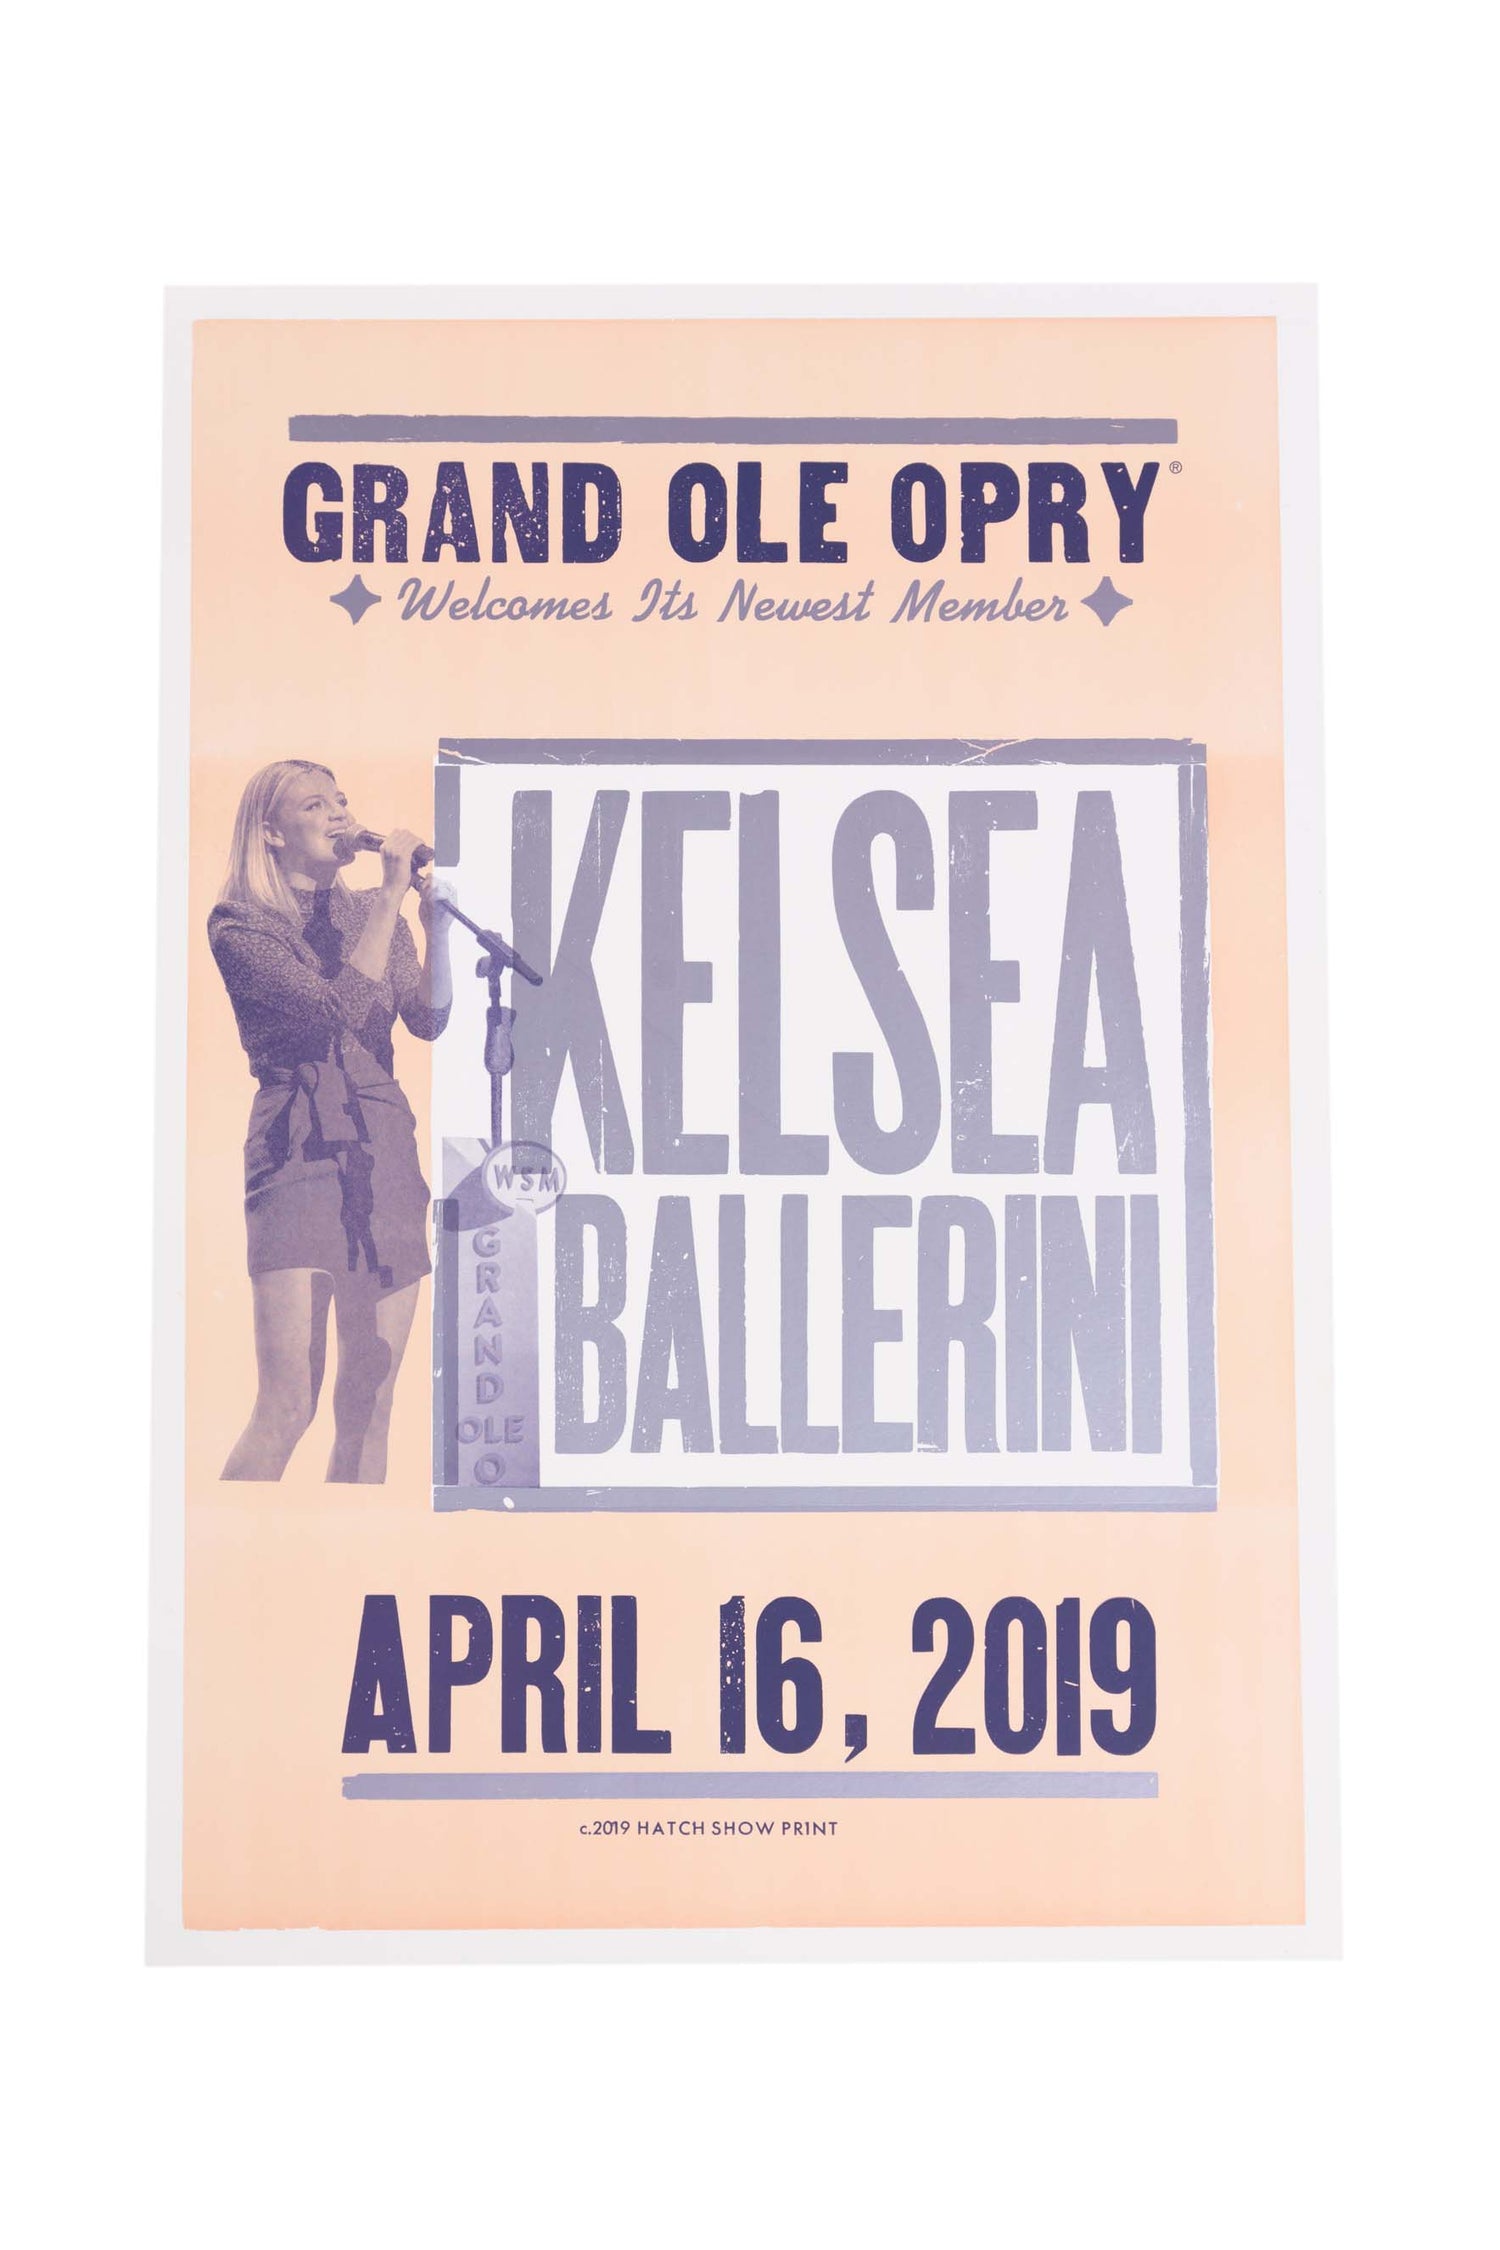 Kelsea Ballerini Opry Induction Hatch Show Print